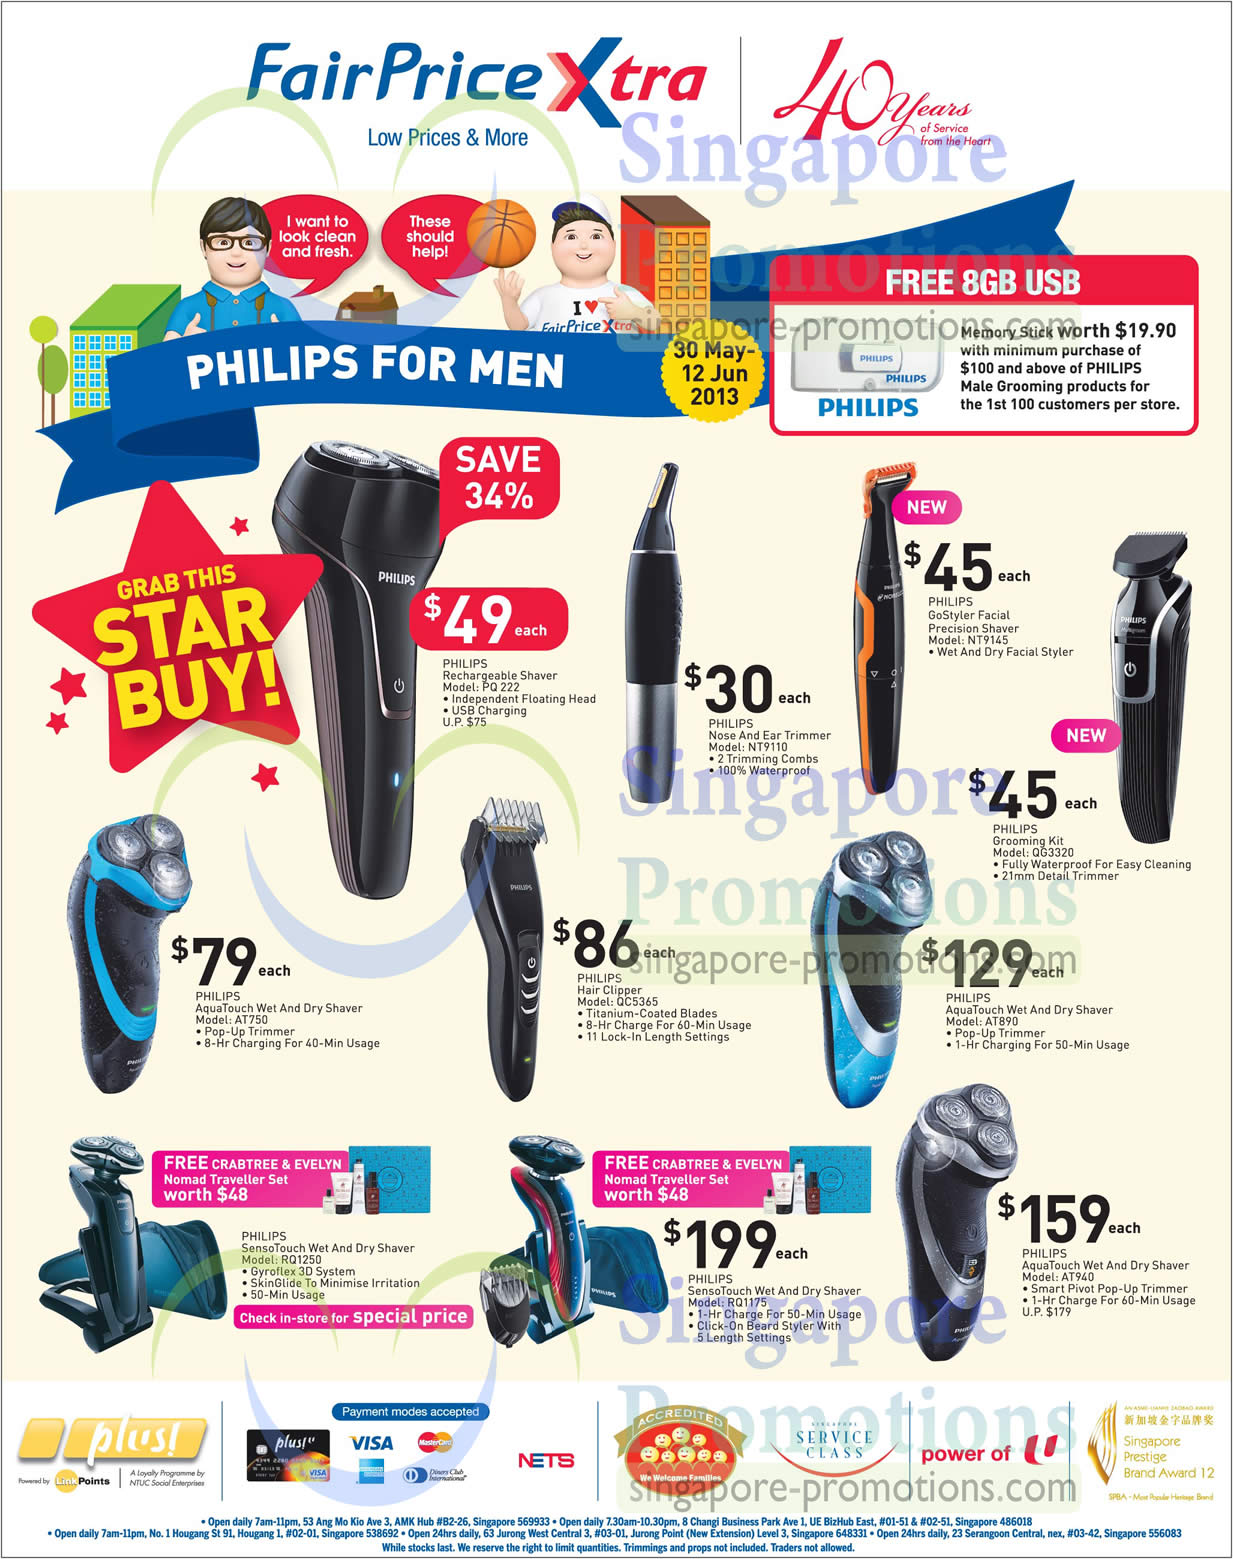 philips hair clipper guard sizes